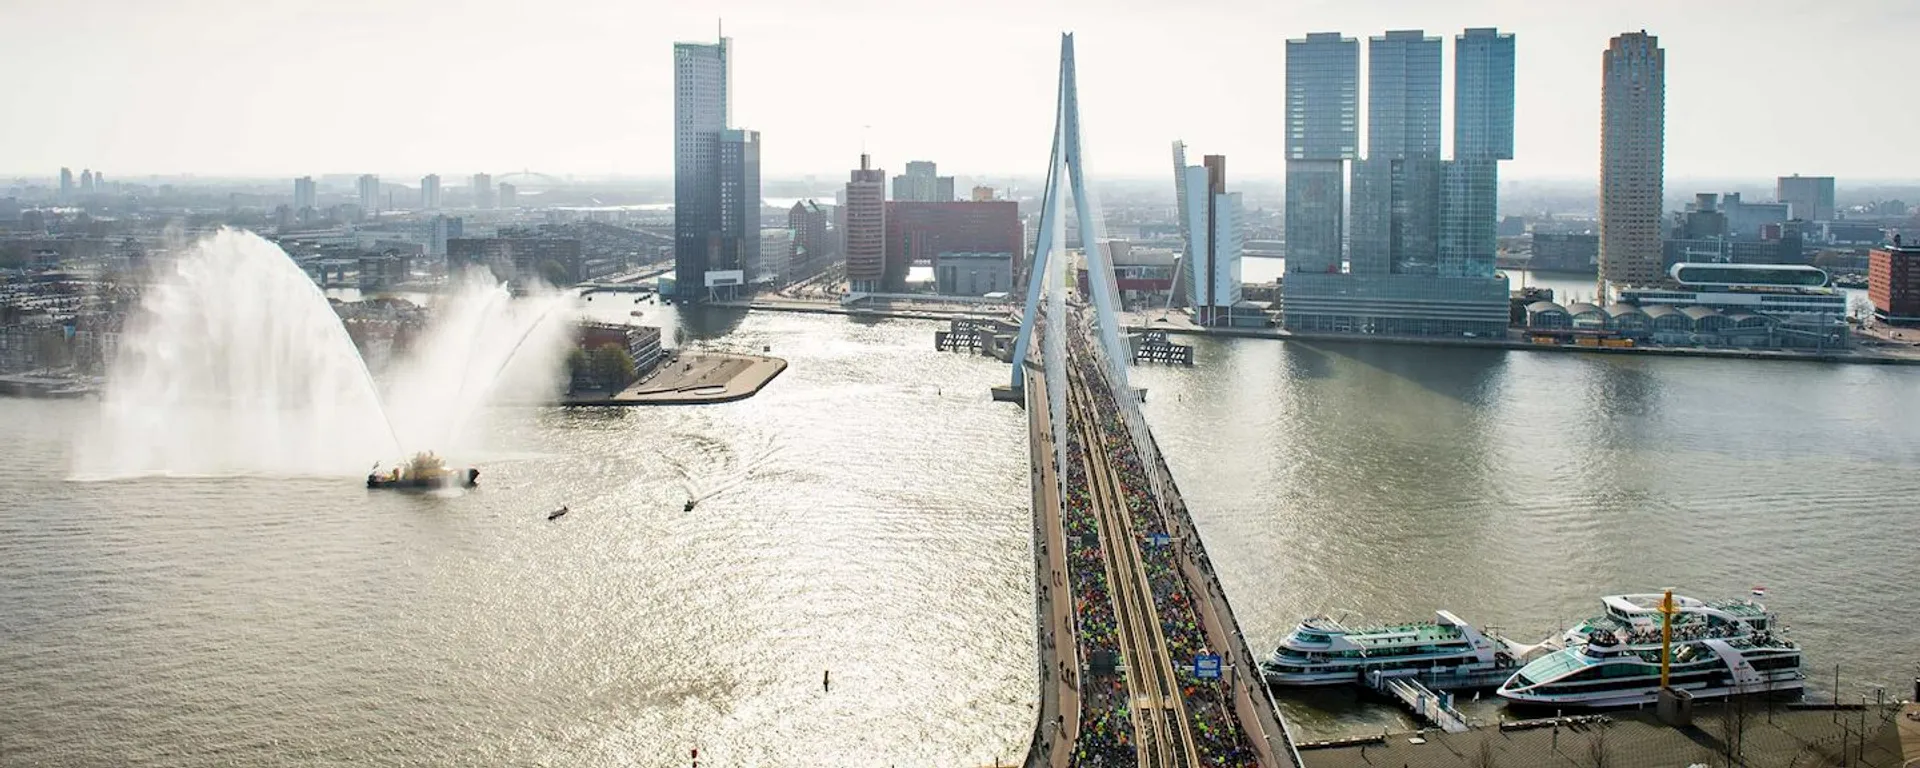 NN Marathon Rotterdam